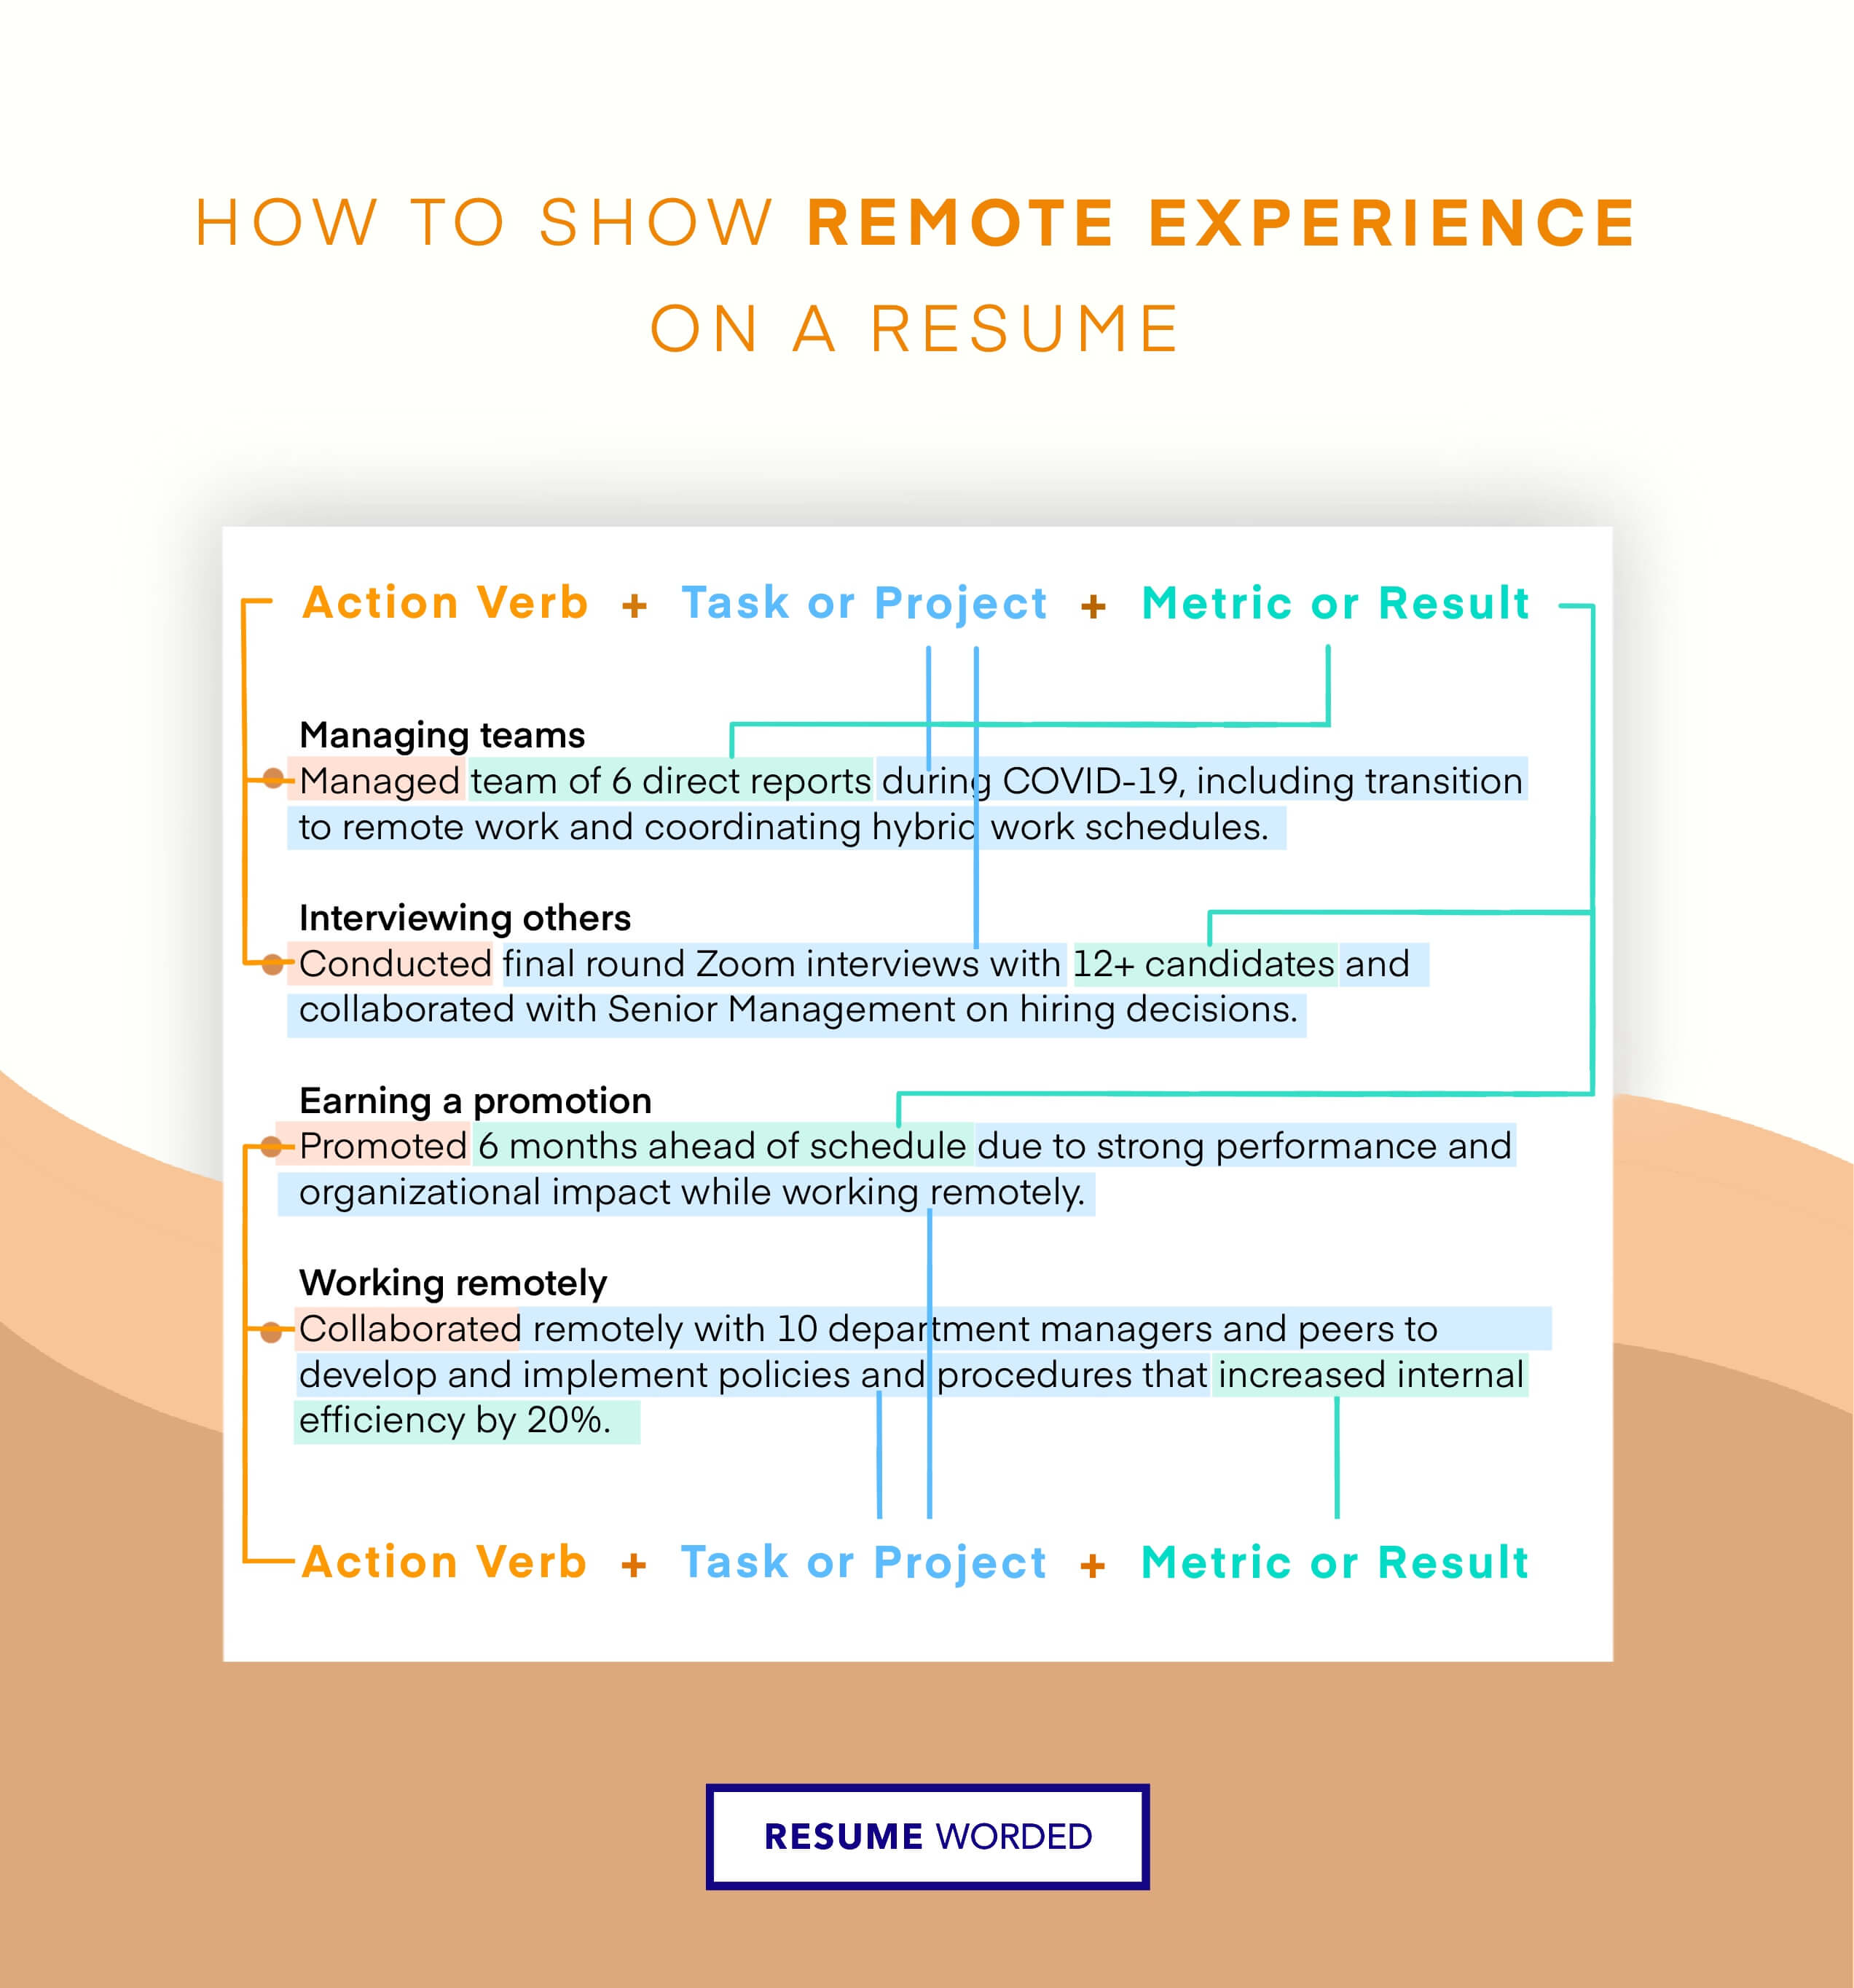 Emphasize your remote working capabilities - Inside Sales Representative  CV